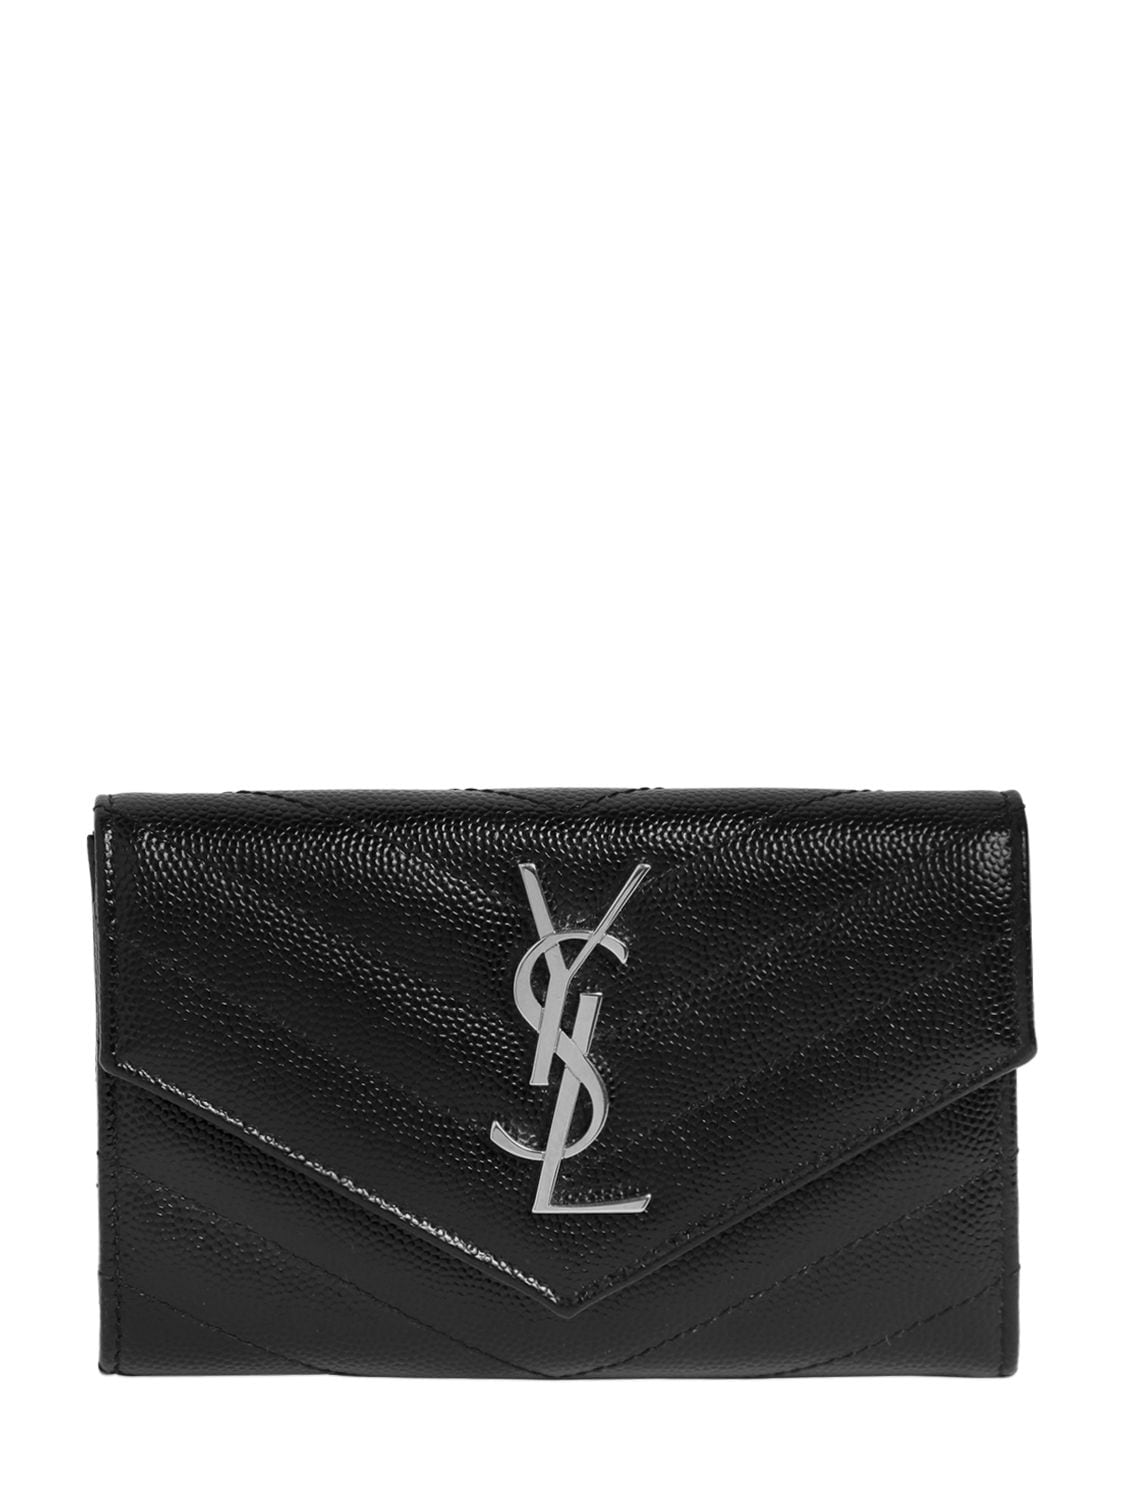 Saint Laurent Sm Monogram Leather Envelope Wallet In Black